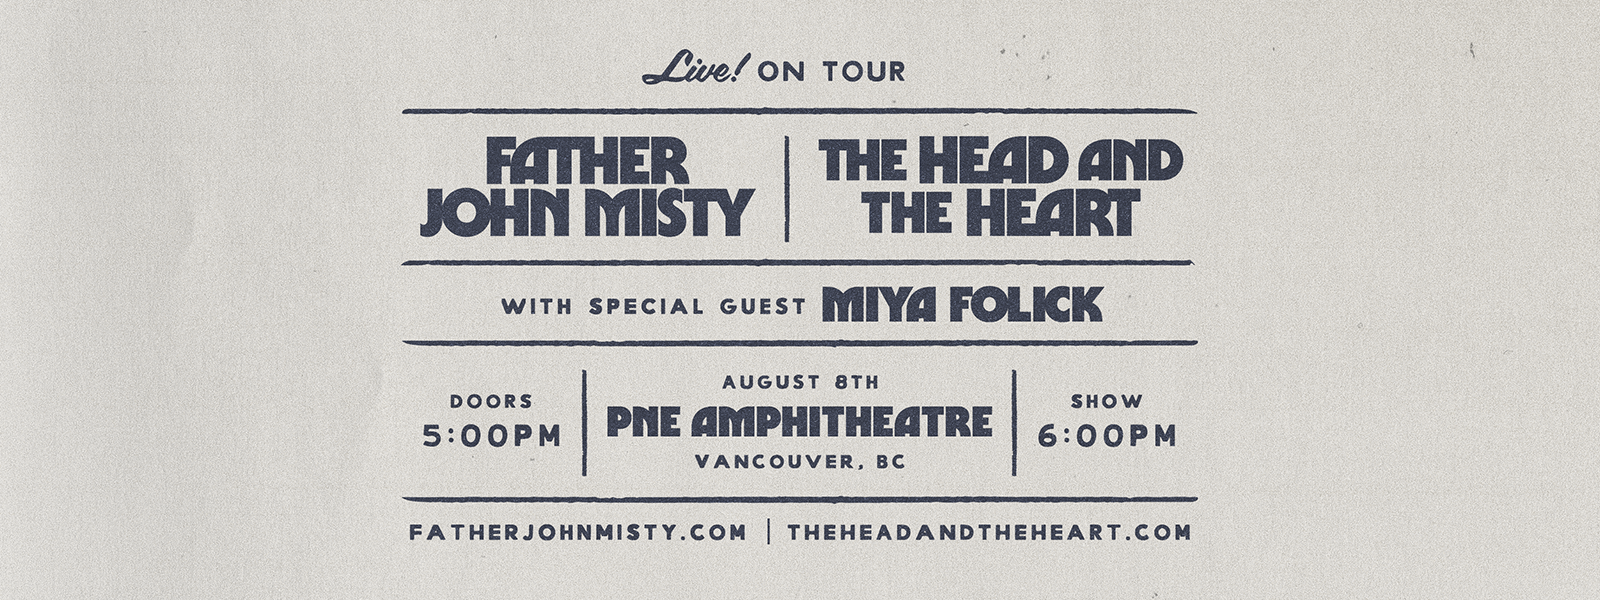 Father John Misty + The Head And The Heart with Miya Folick